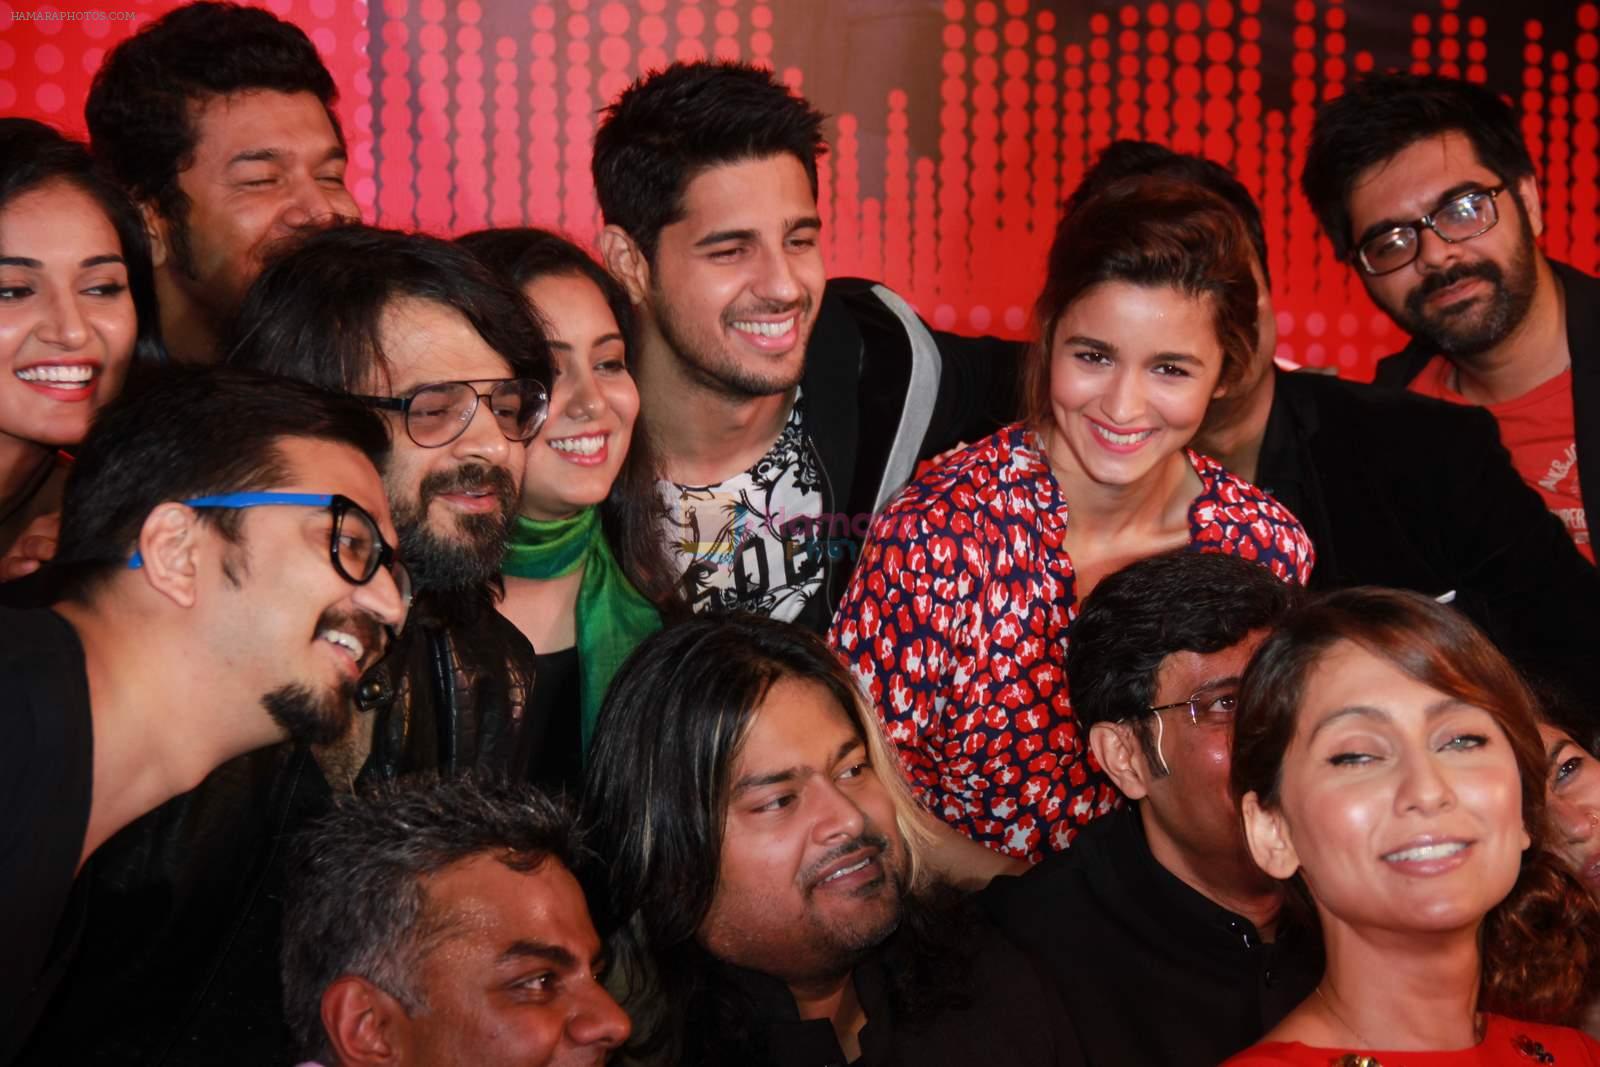 Alia Bhatt, Sidharth Malhotra at MTV Coke studio press meet in Villa 69 on 23rd Feb 2015